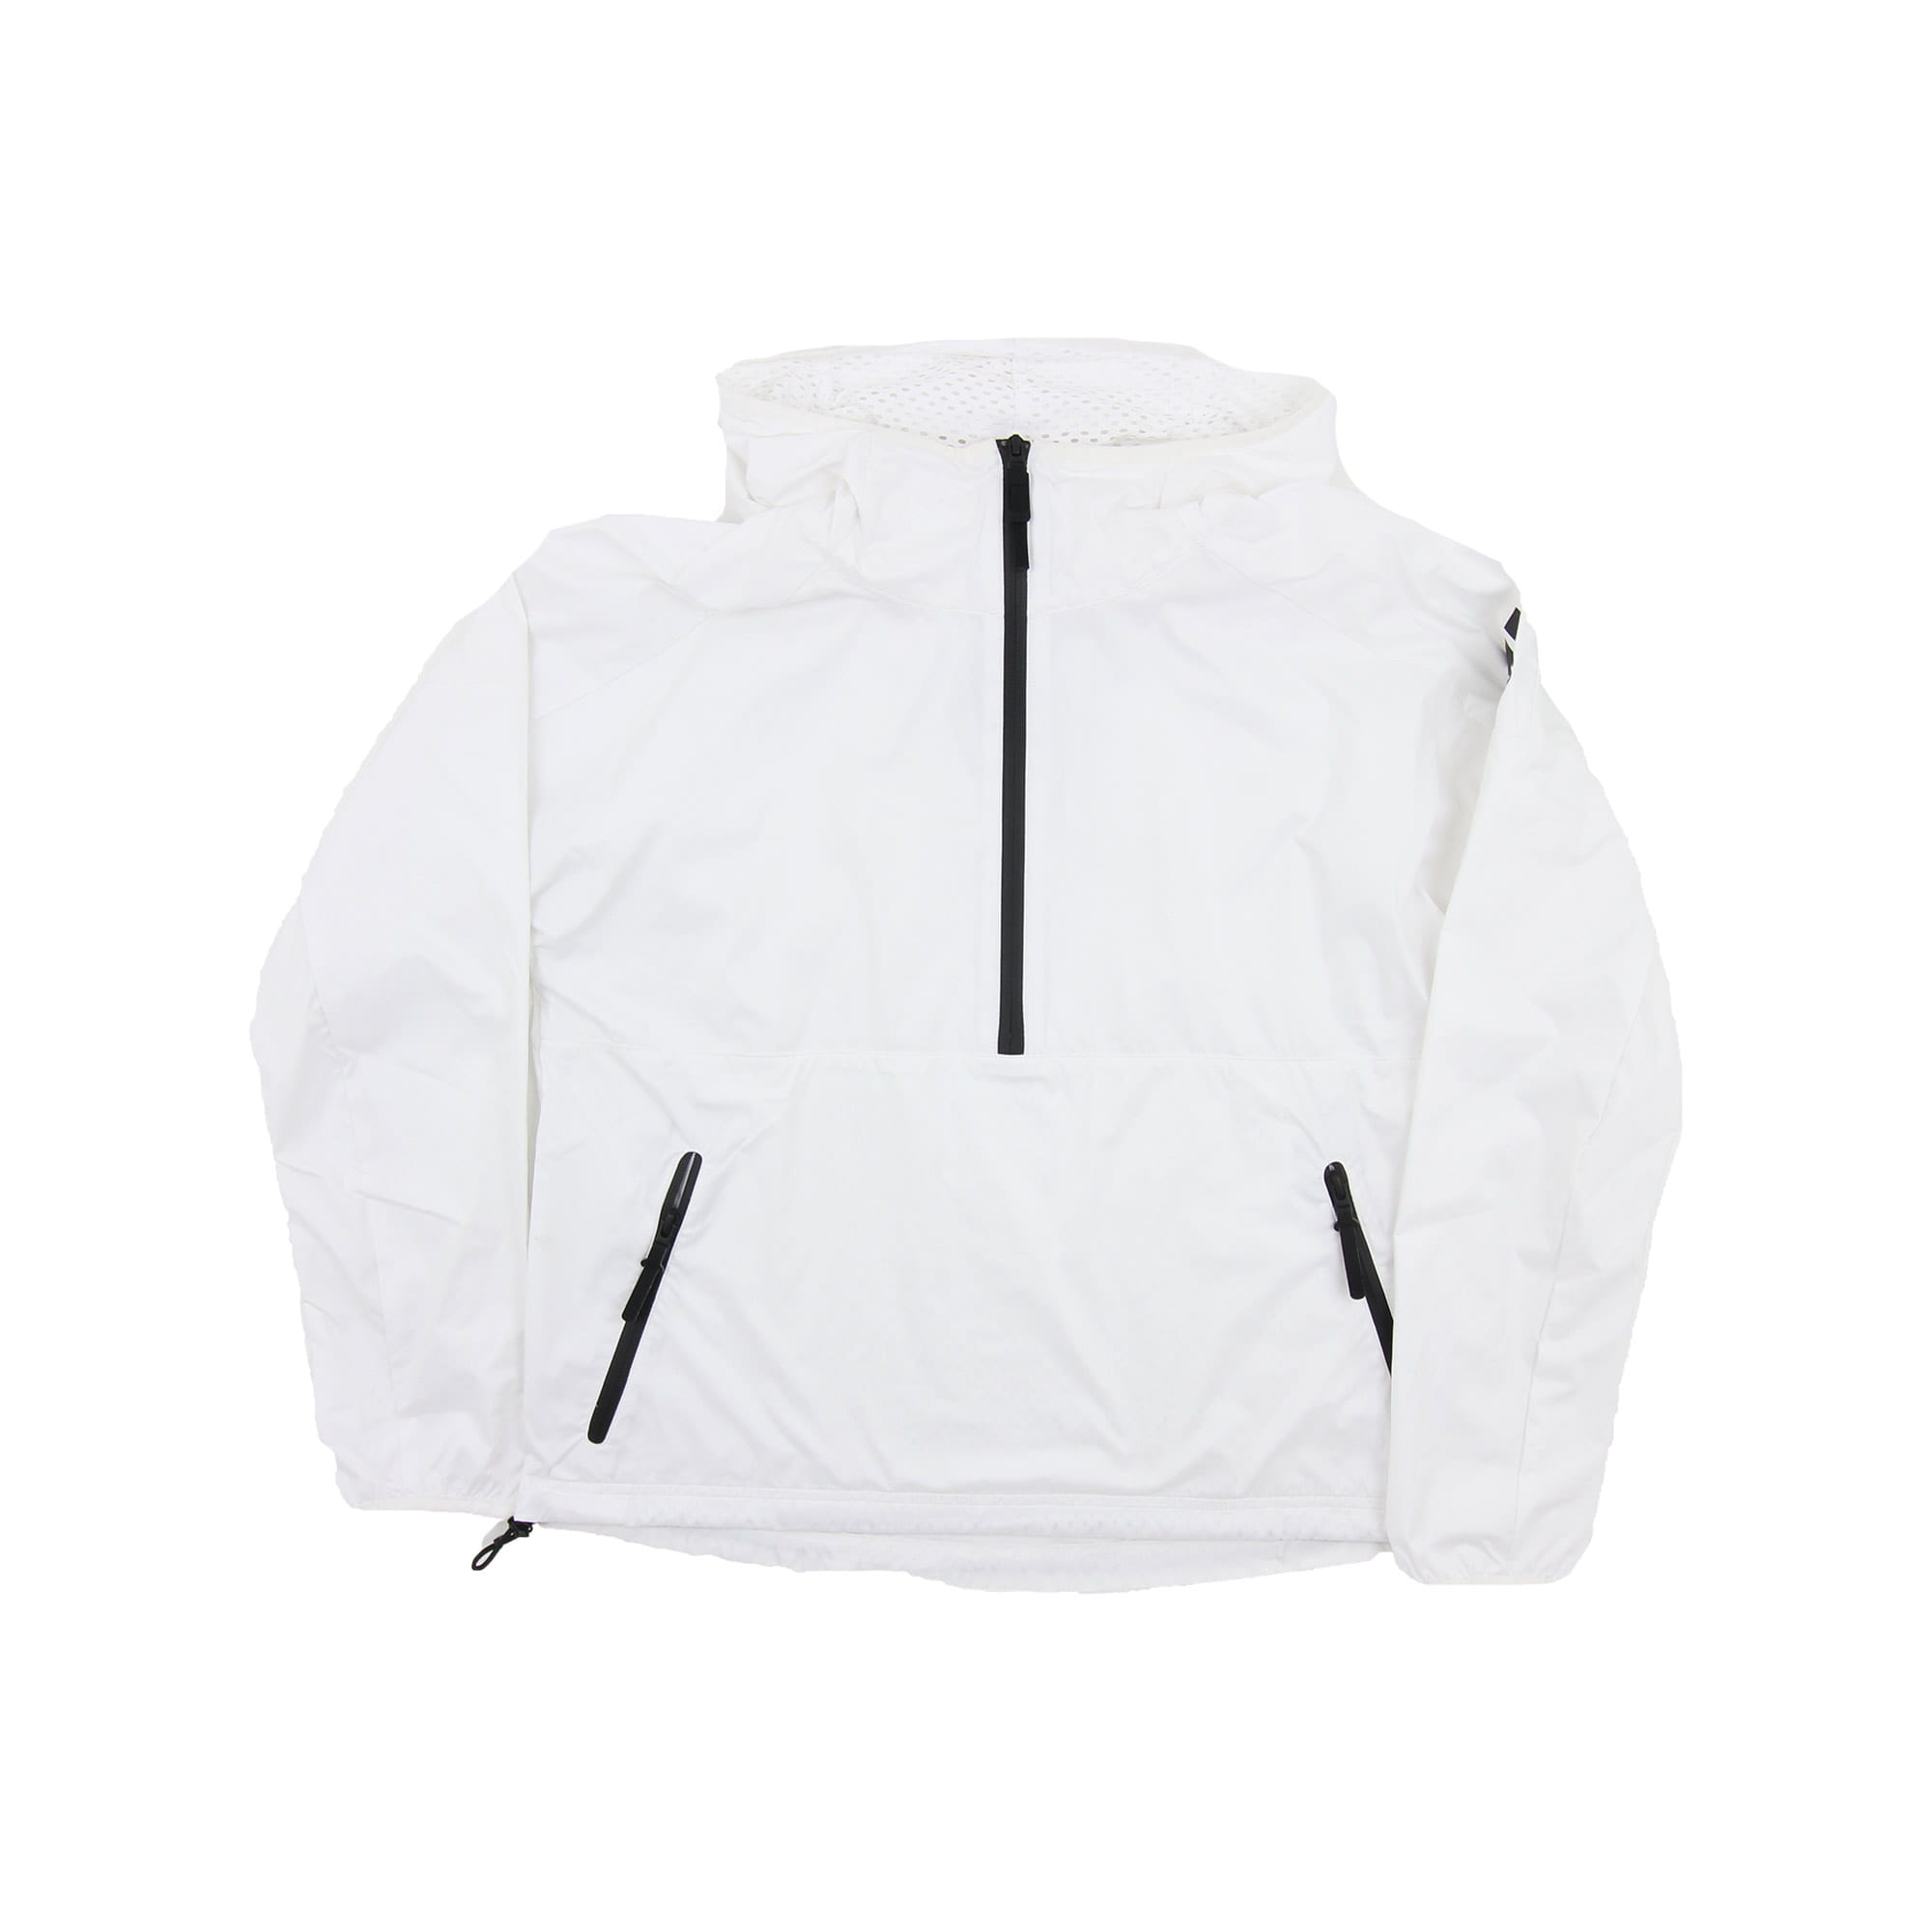 Adidas Half Zip White Thin Jacket - S